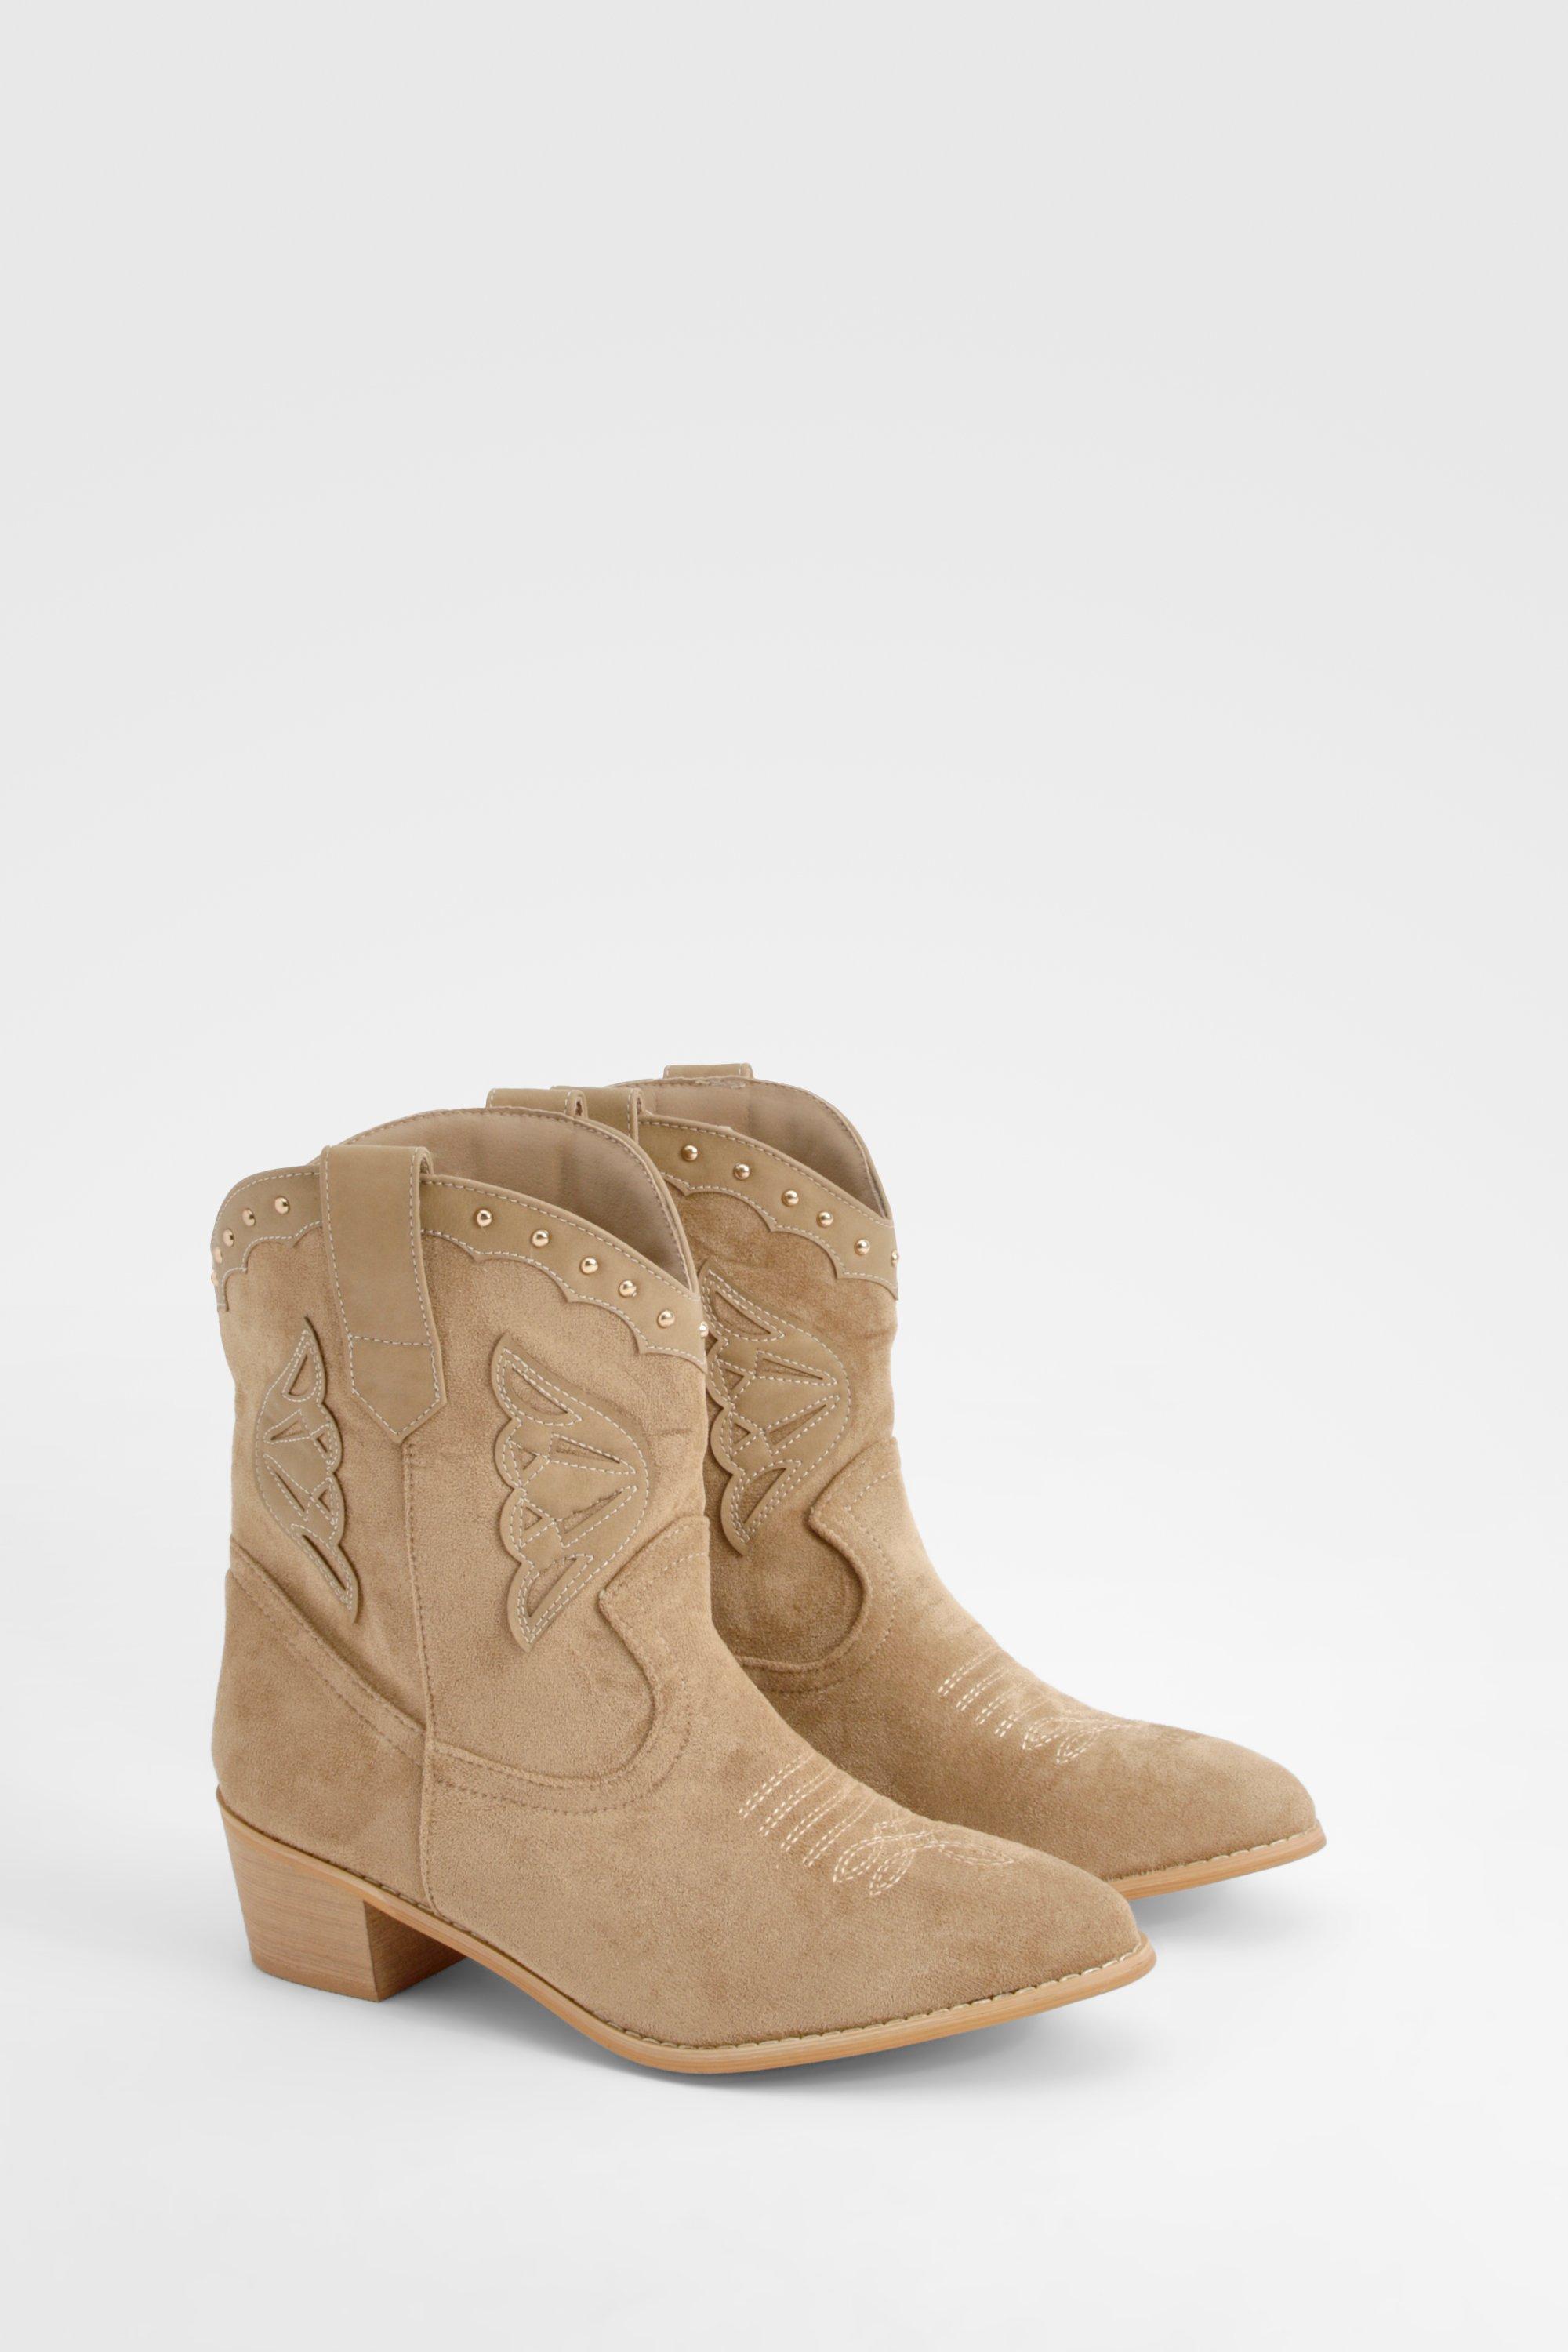 Boohoo Studded Calf High Western Cowboy Boots, Taupe